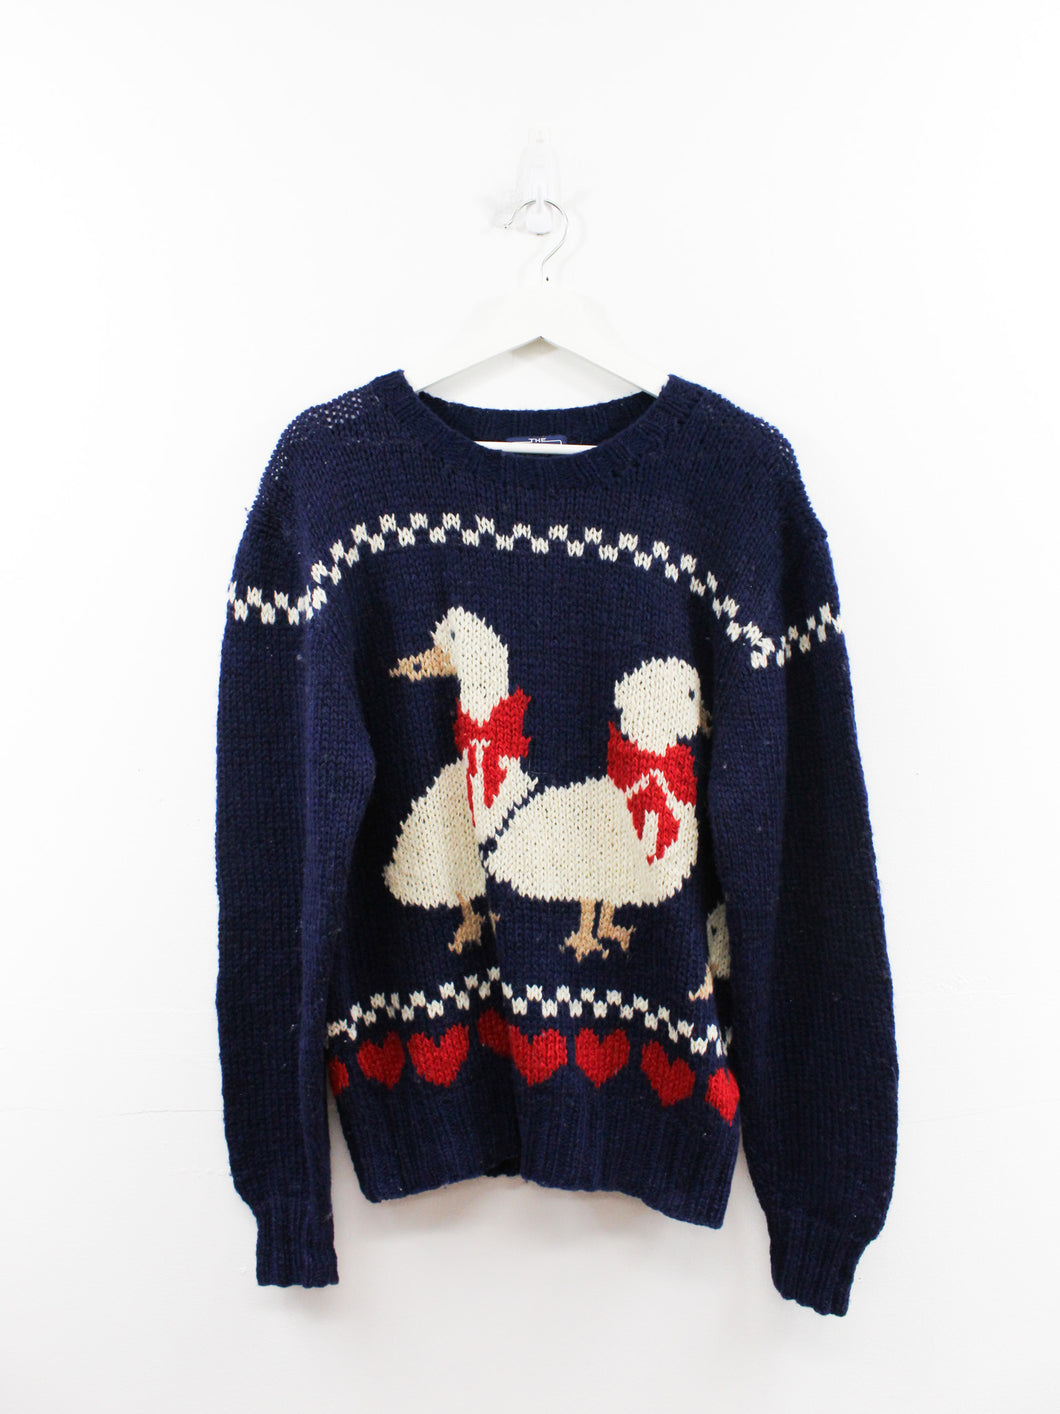 Vintage Ducks & Hearts Knit Sweater